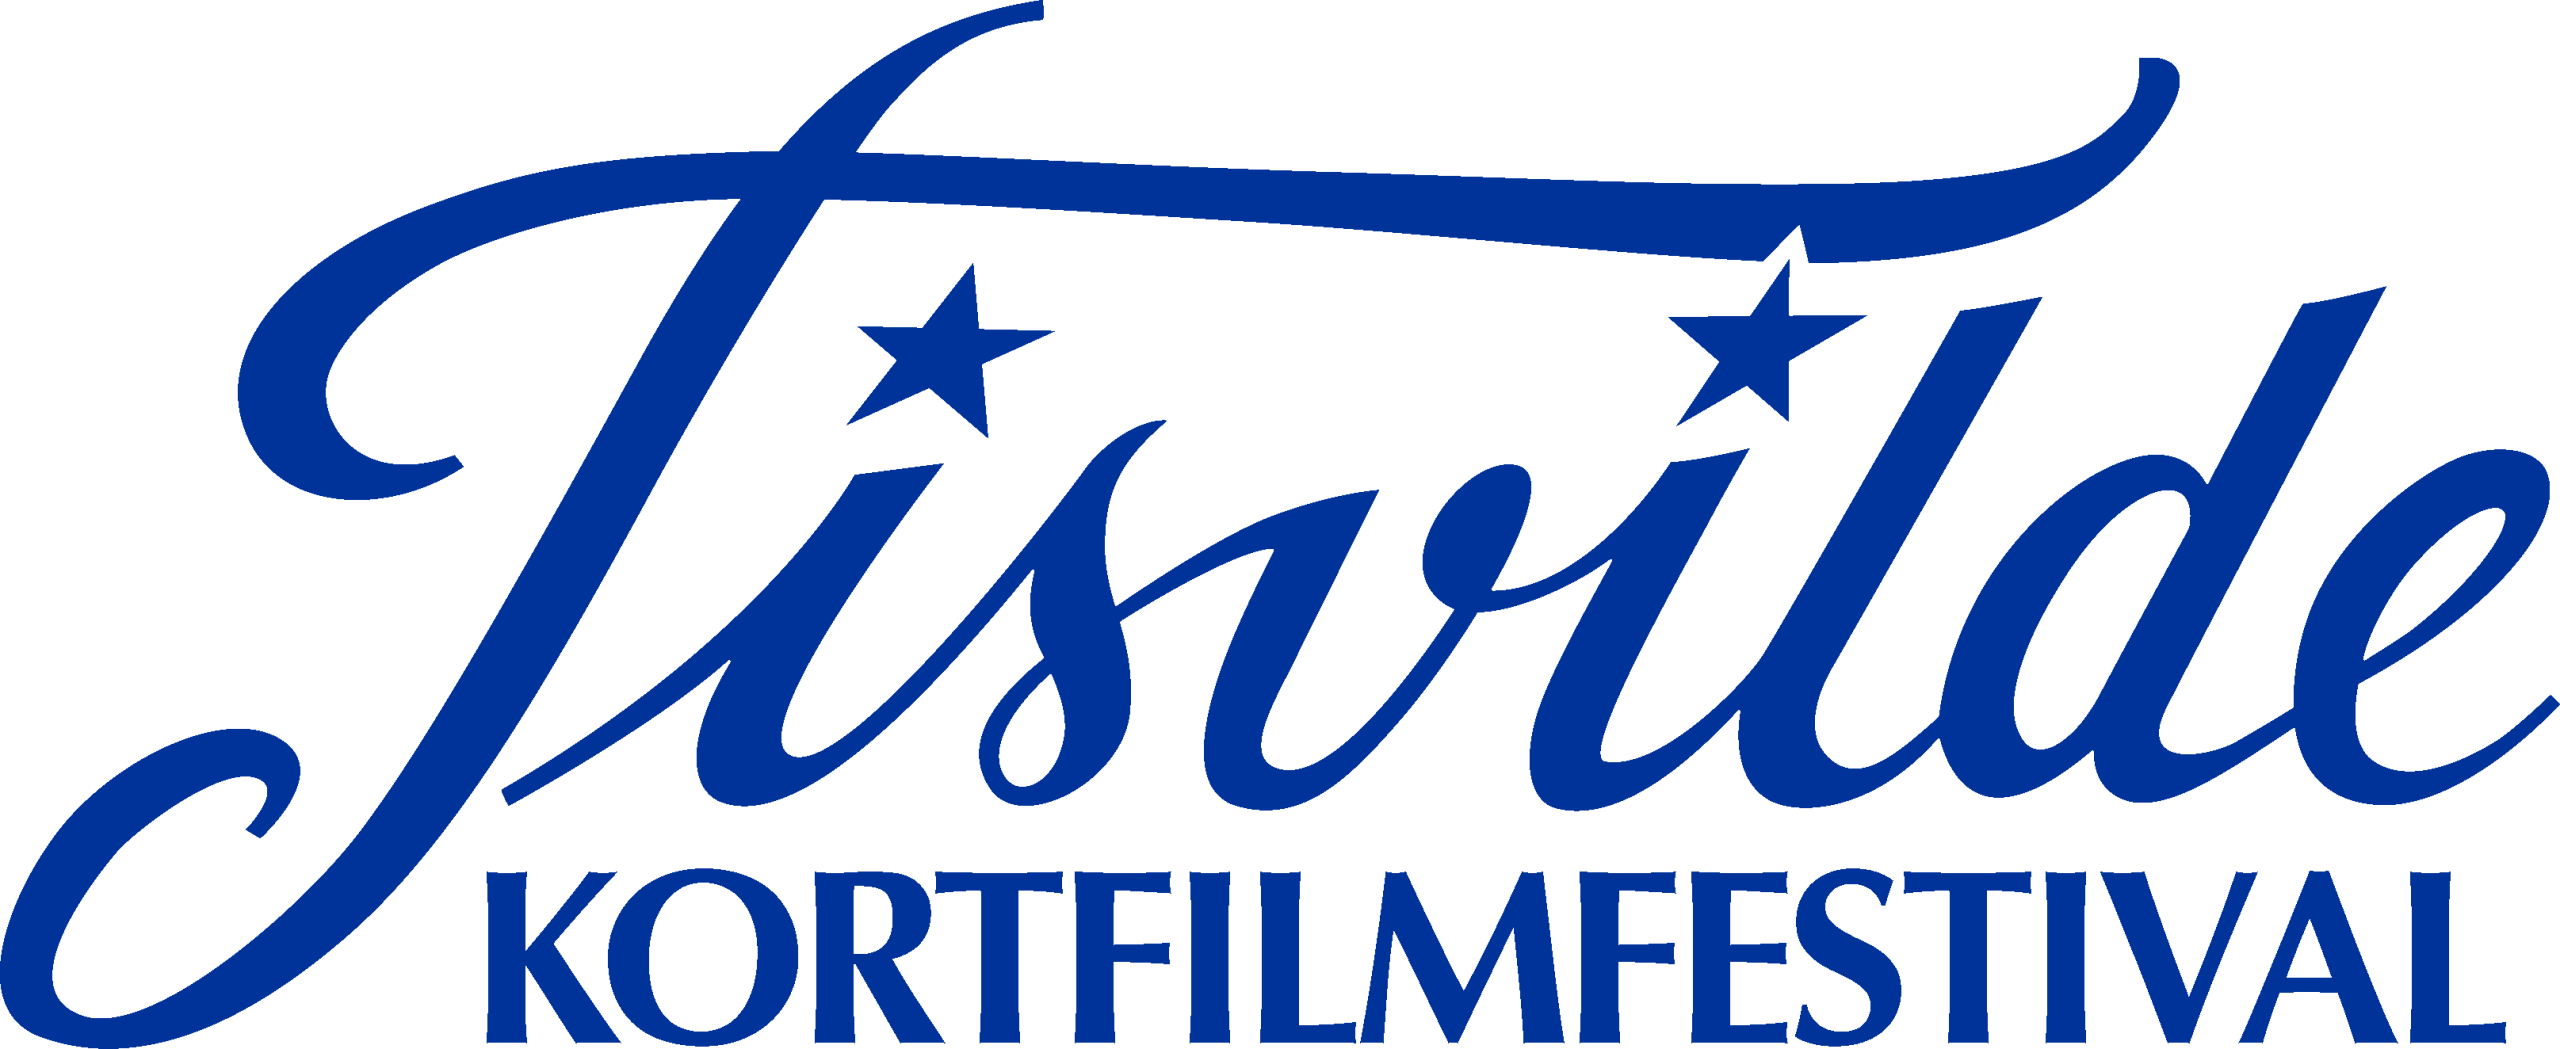 Tisvilde kortfilmfestival